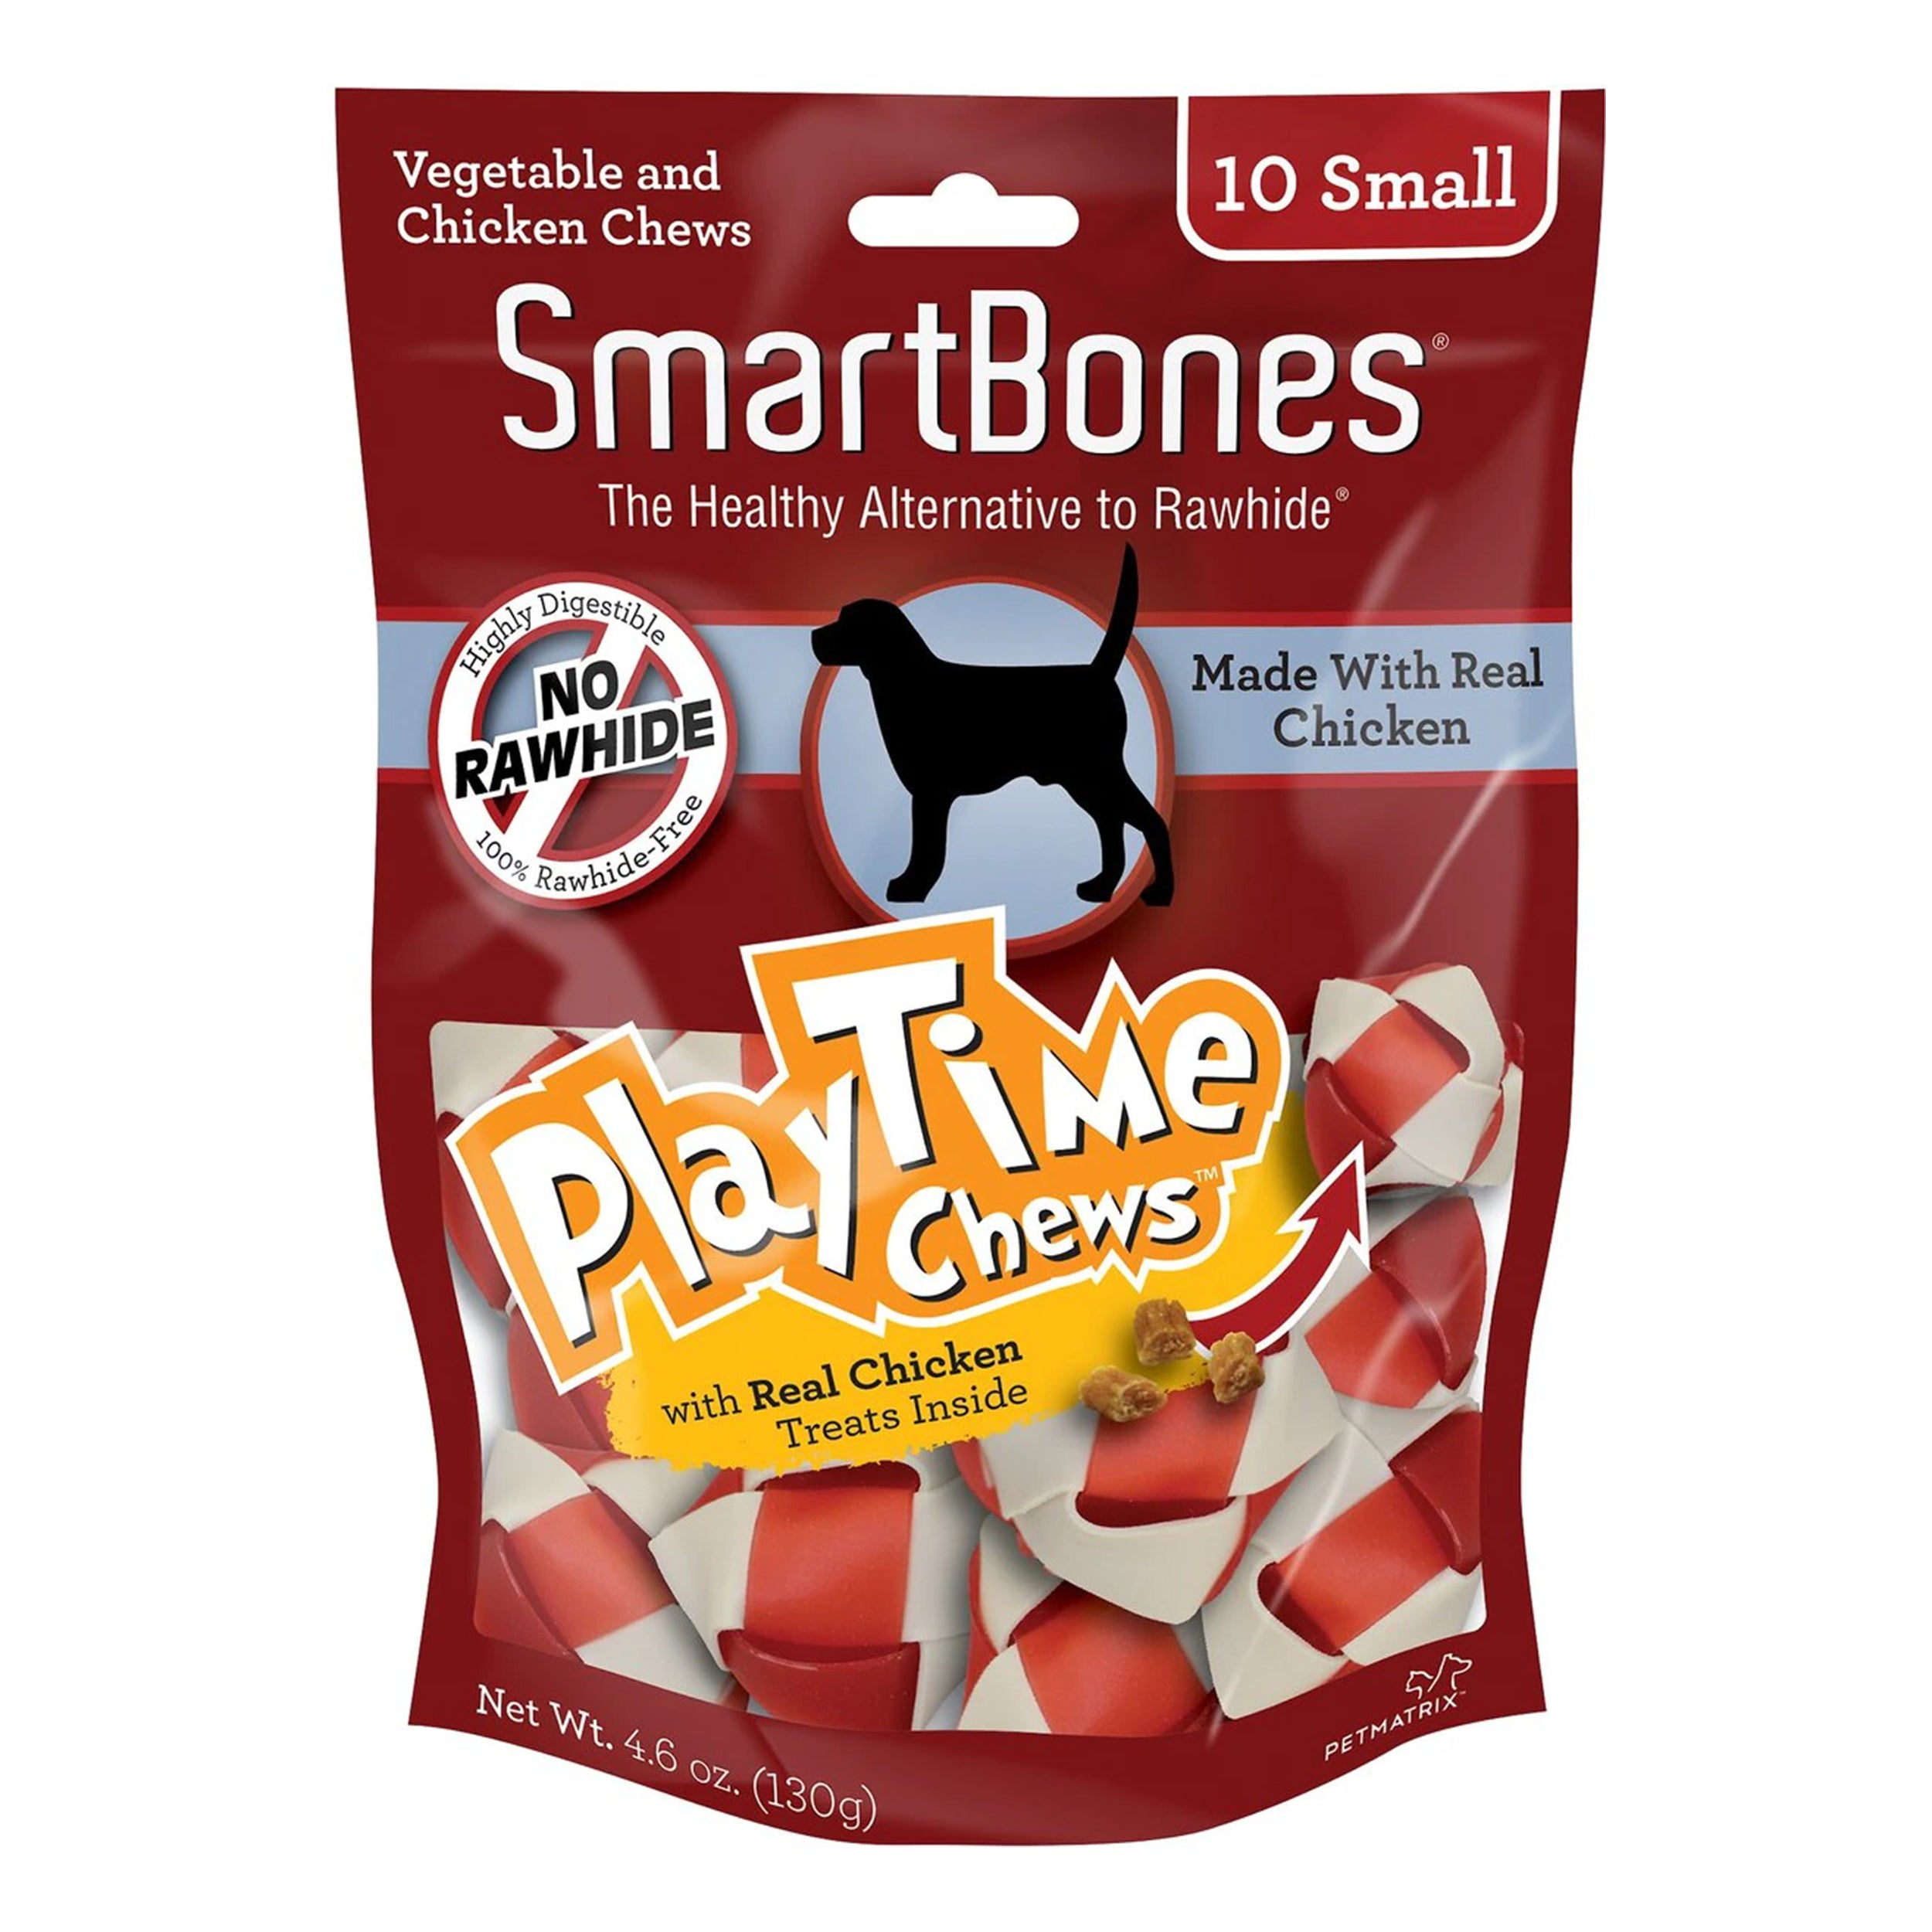 SmartBones Small PlayTime Chicken Chews Dog Treats, 10 Count